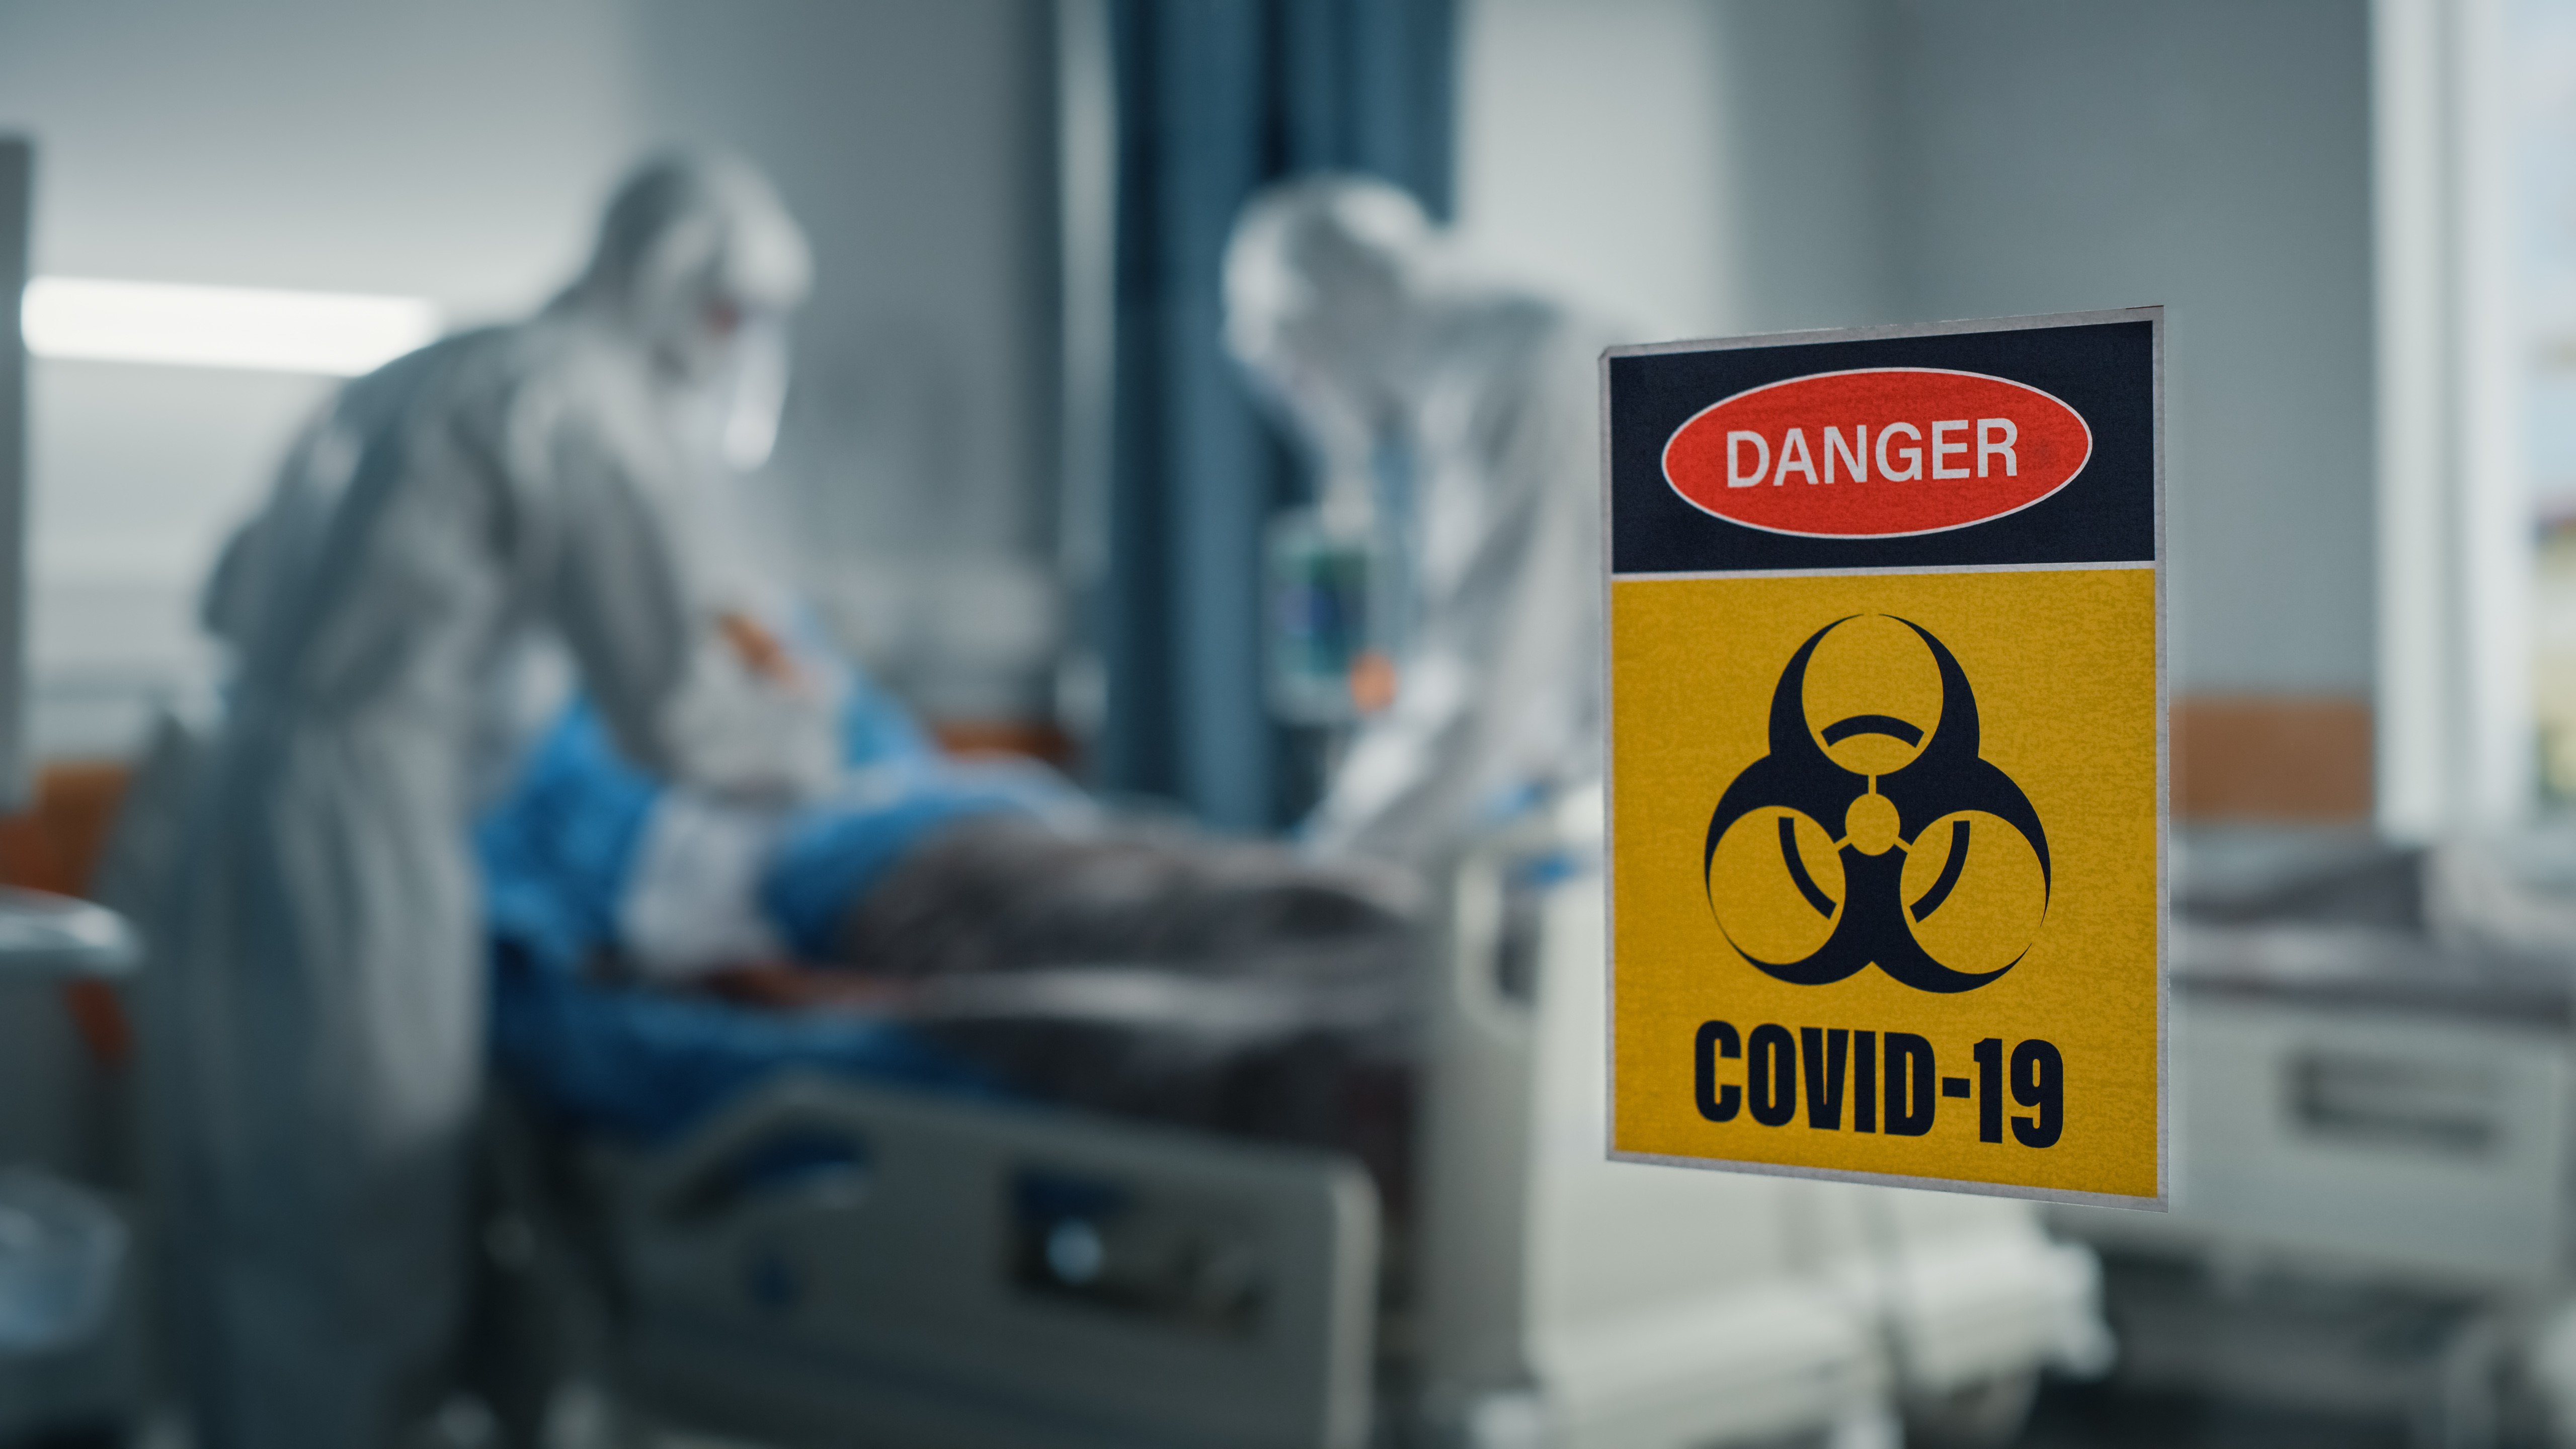 COVID-19 danger coronavirus pandemic quarantine